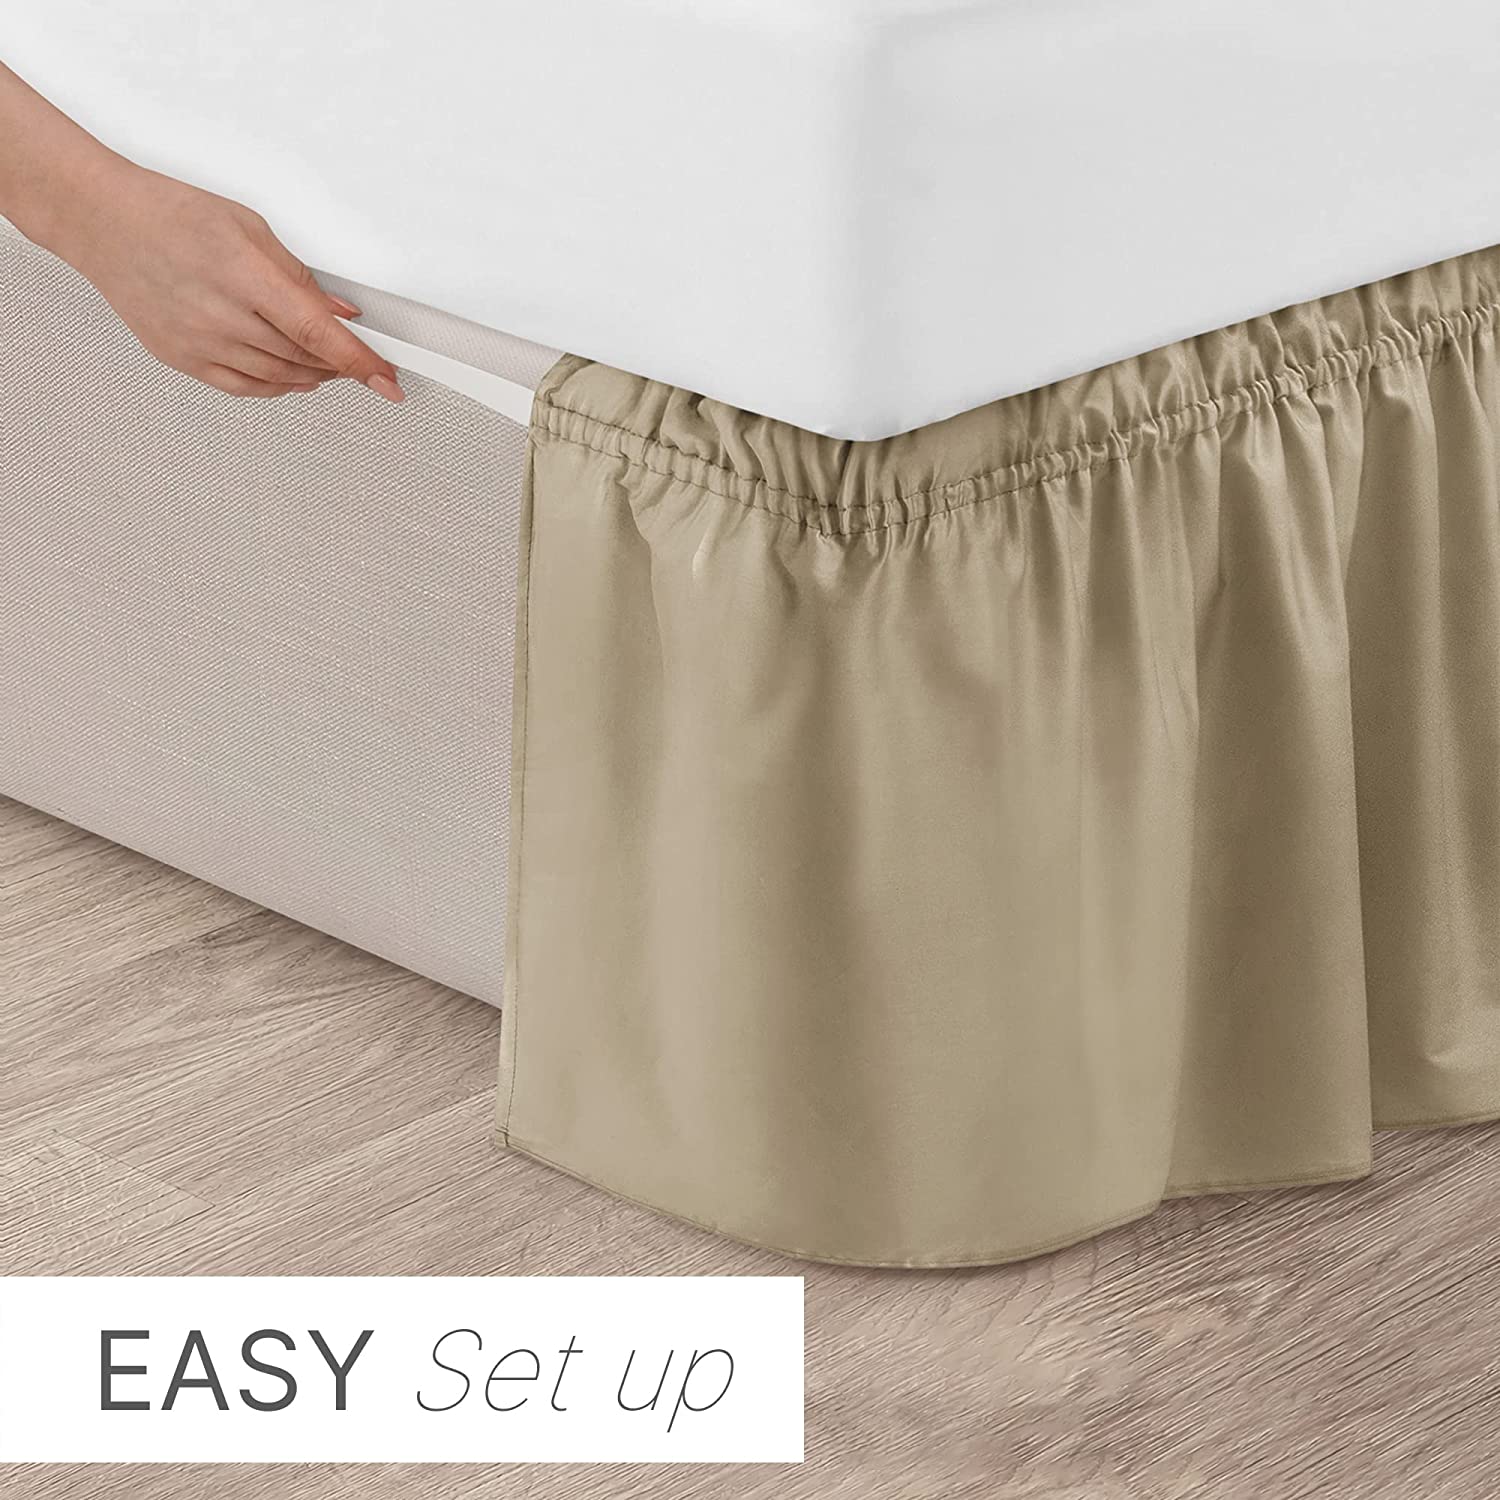 tes Ruffled Elastic Wrap Around Bedskirt 12 Inch Drop - Beige